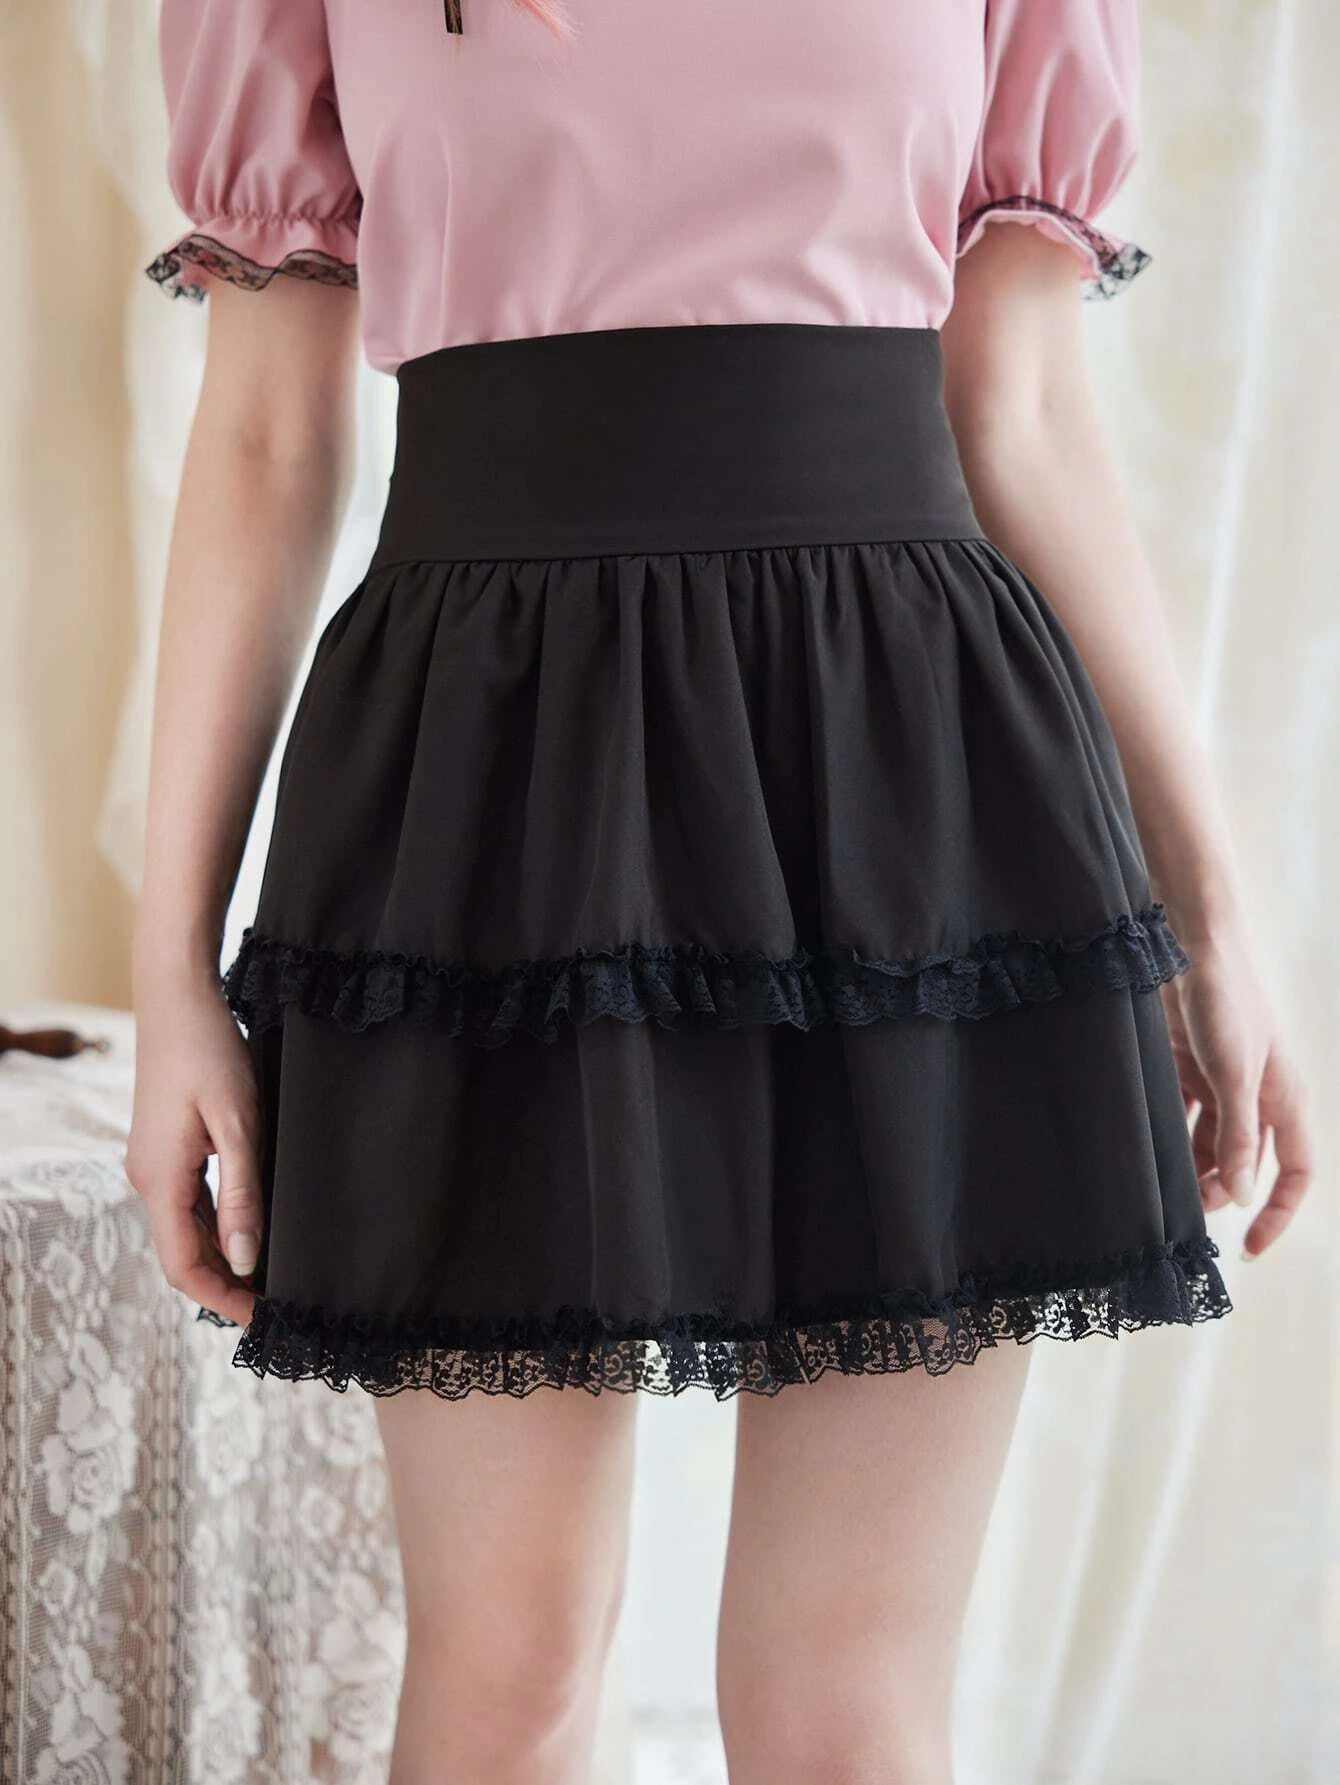 ROMWE Kawaii Solid Frill Contrast Lace Skirt